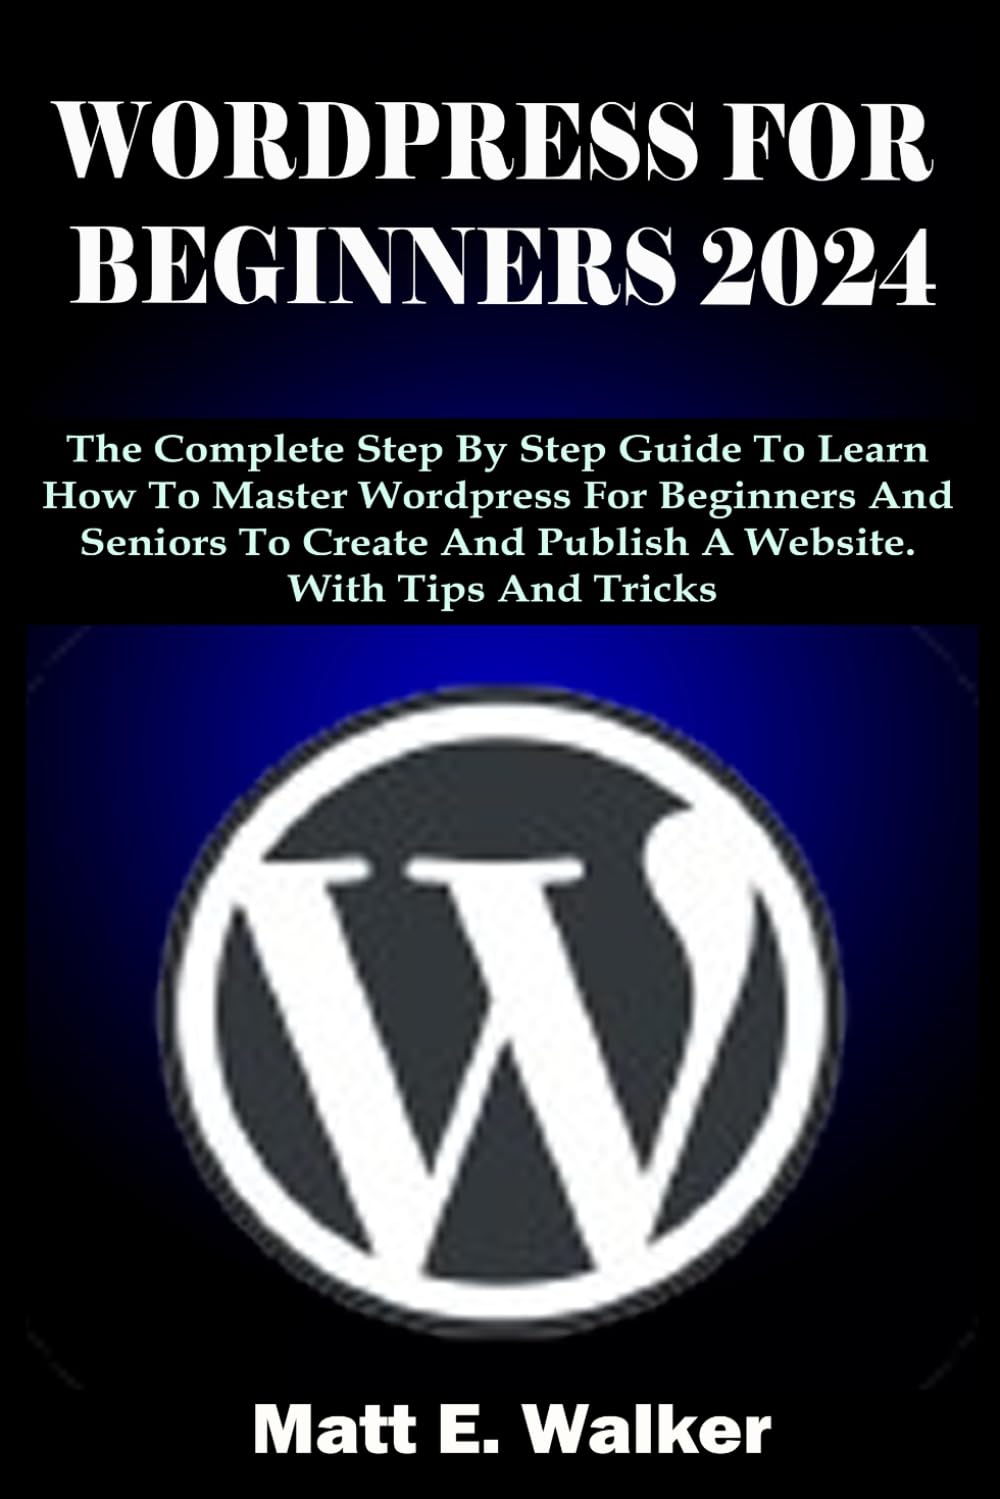 "WordPress for Beginners 2024"